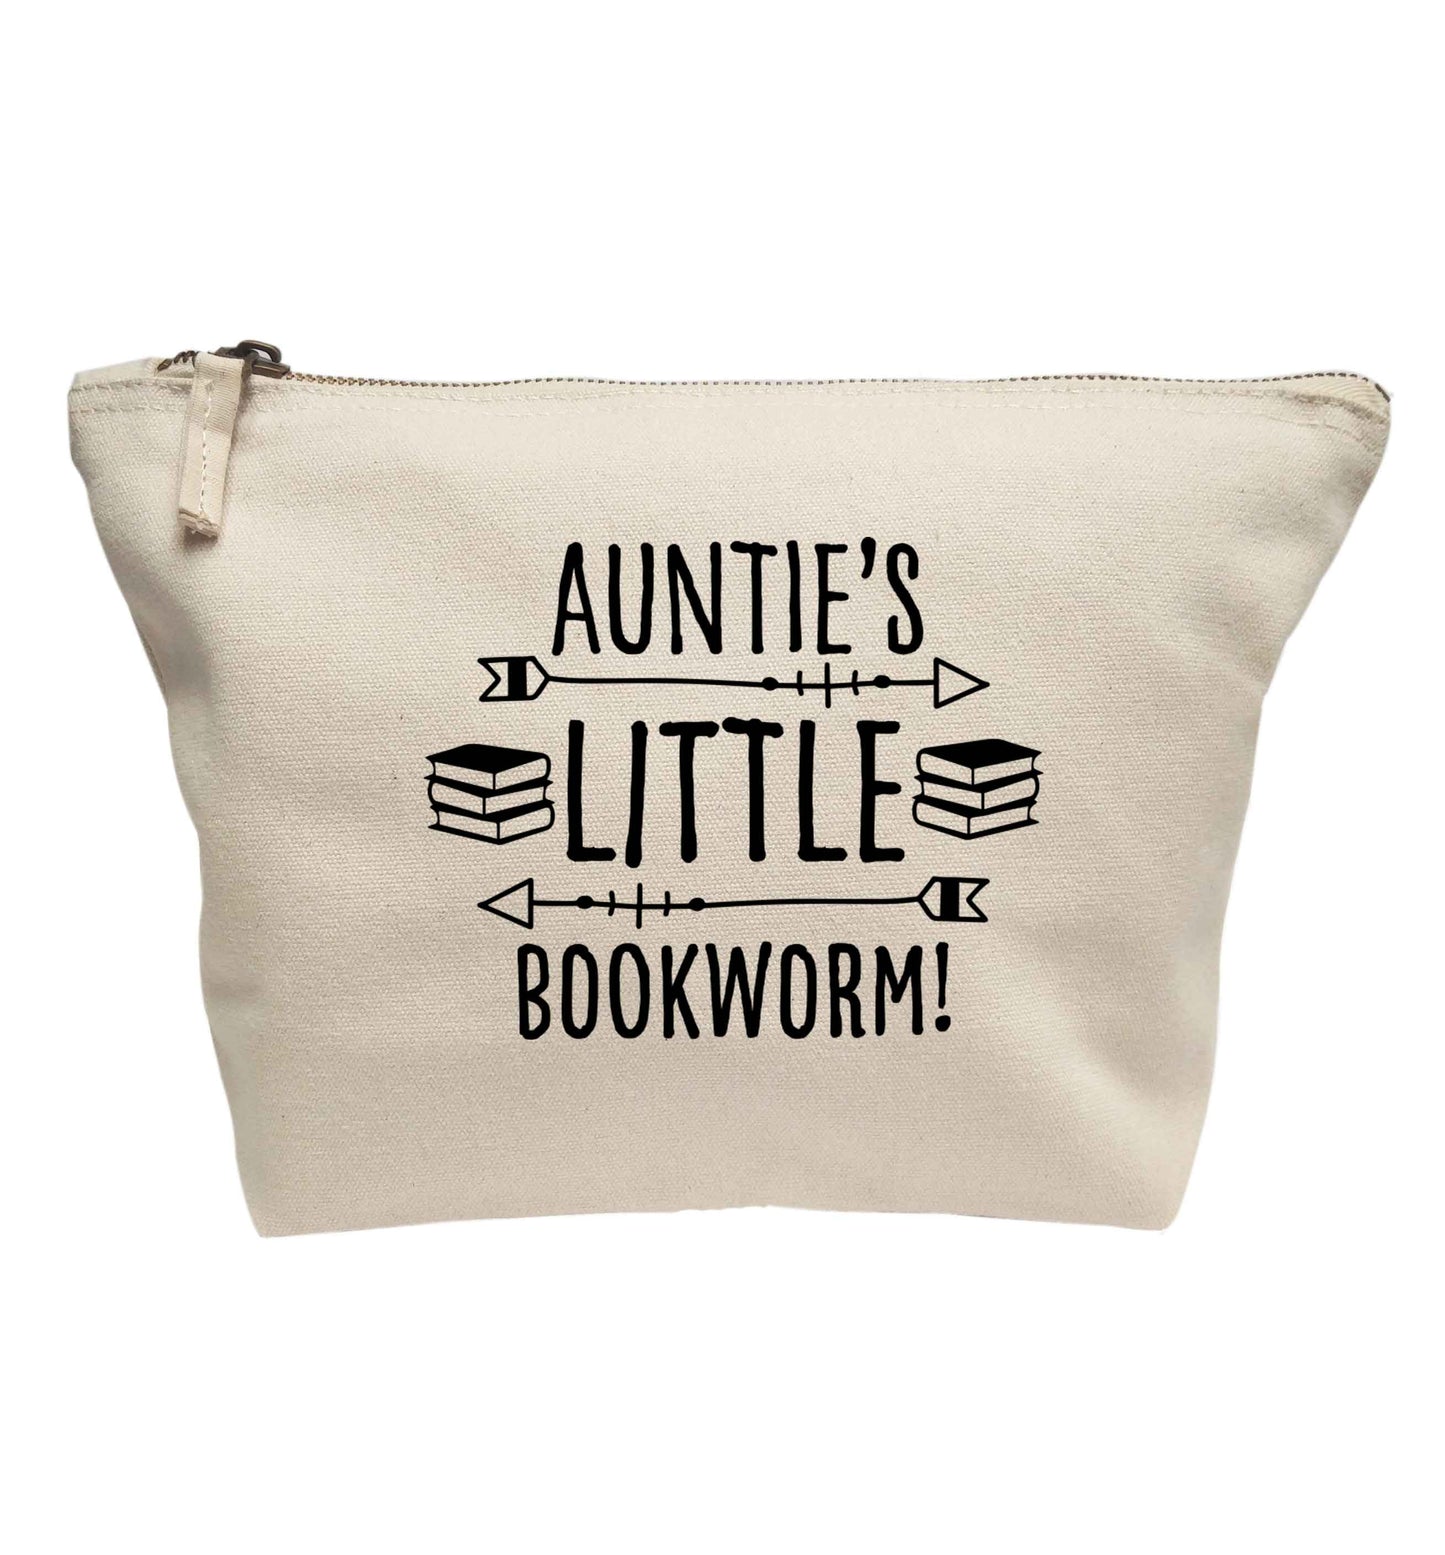 Auntie's little bookworm | Makeup / wash bag